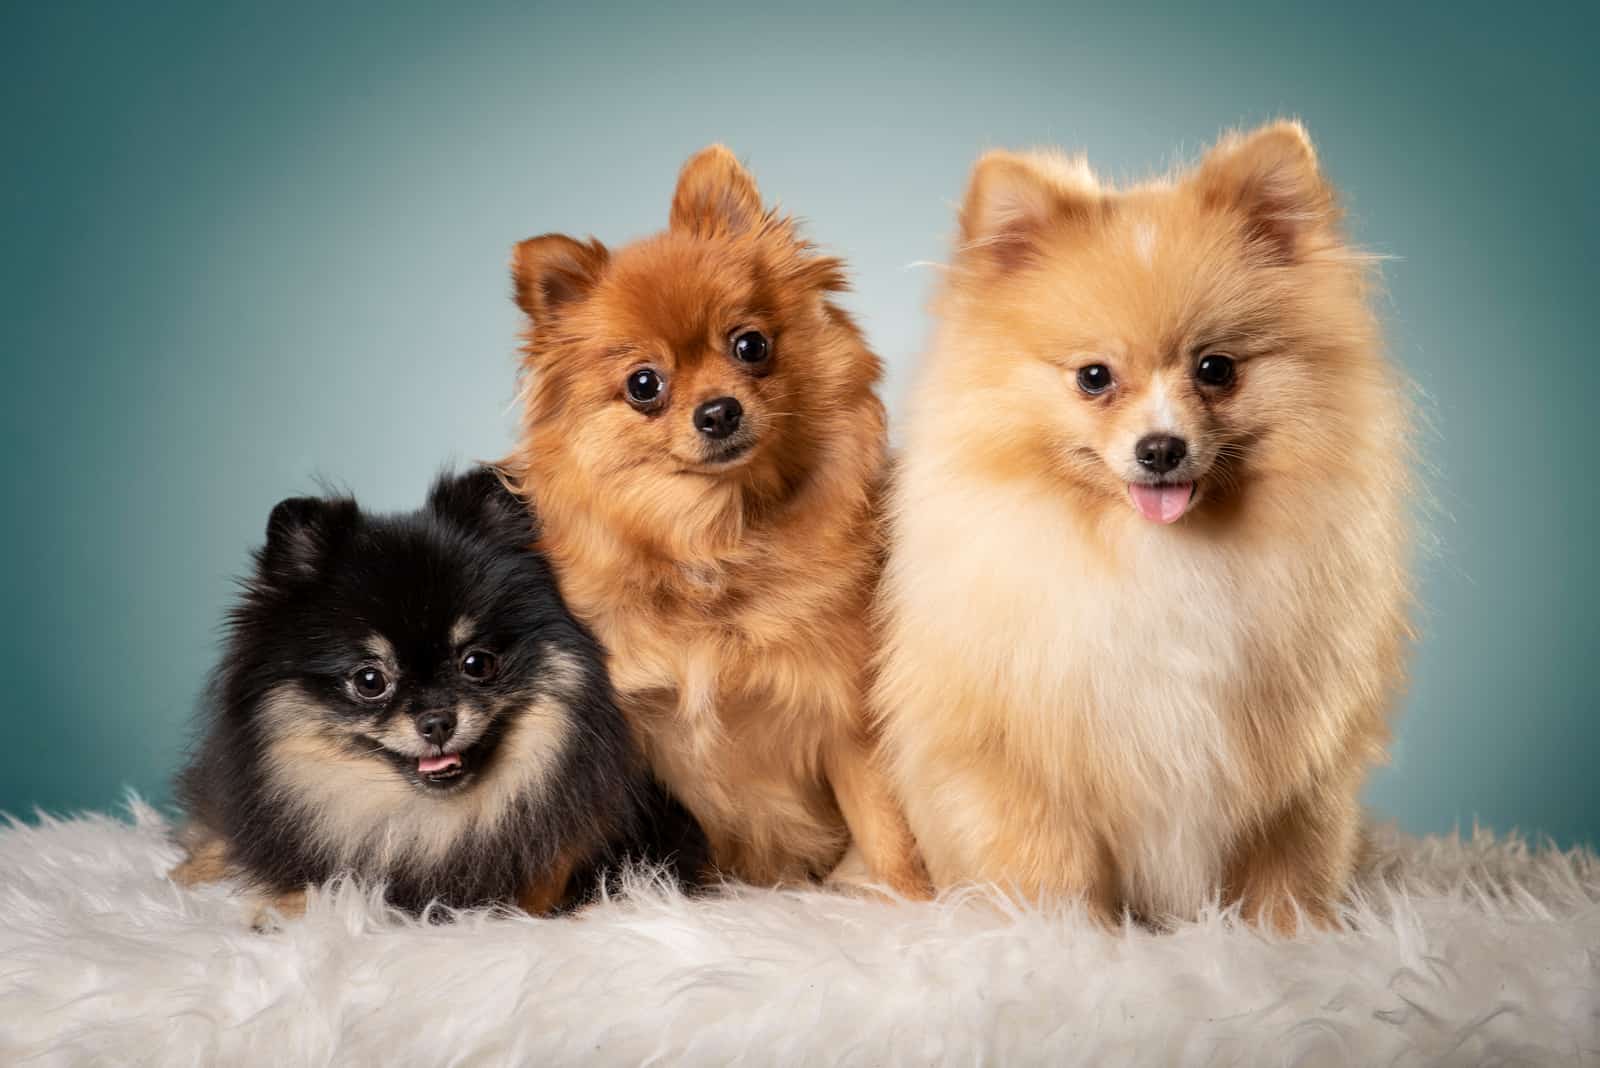 three adorable Pomeranians